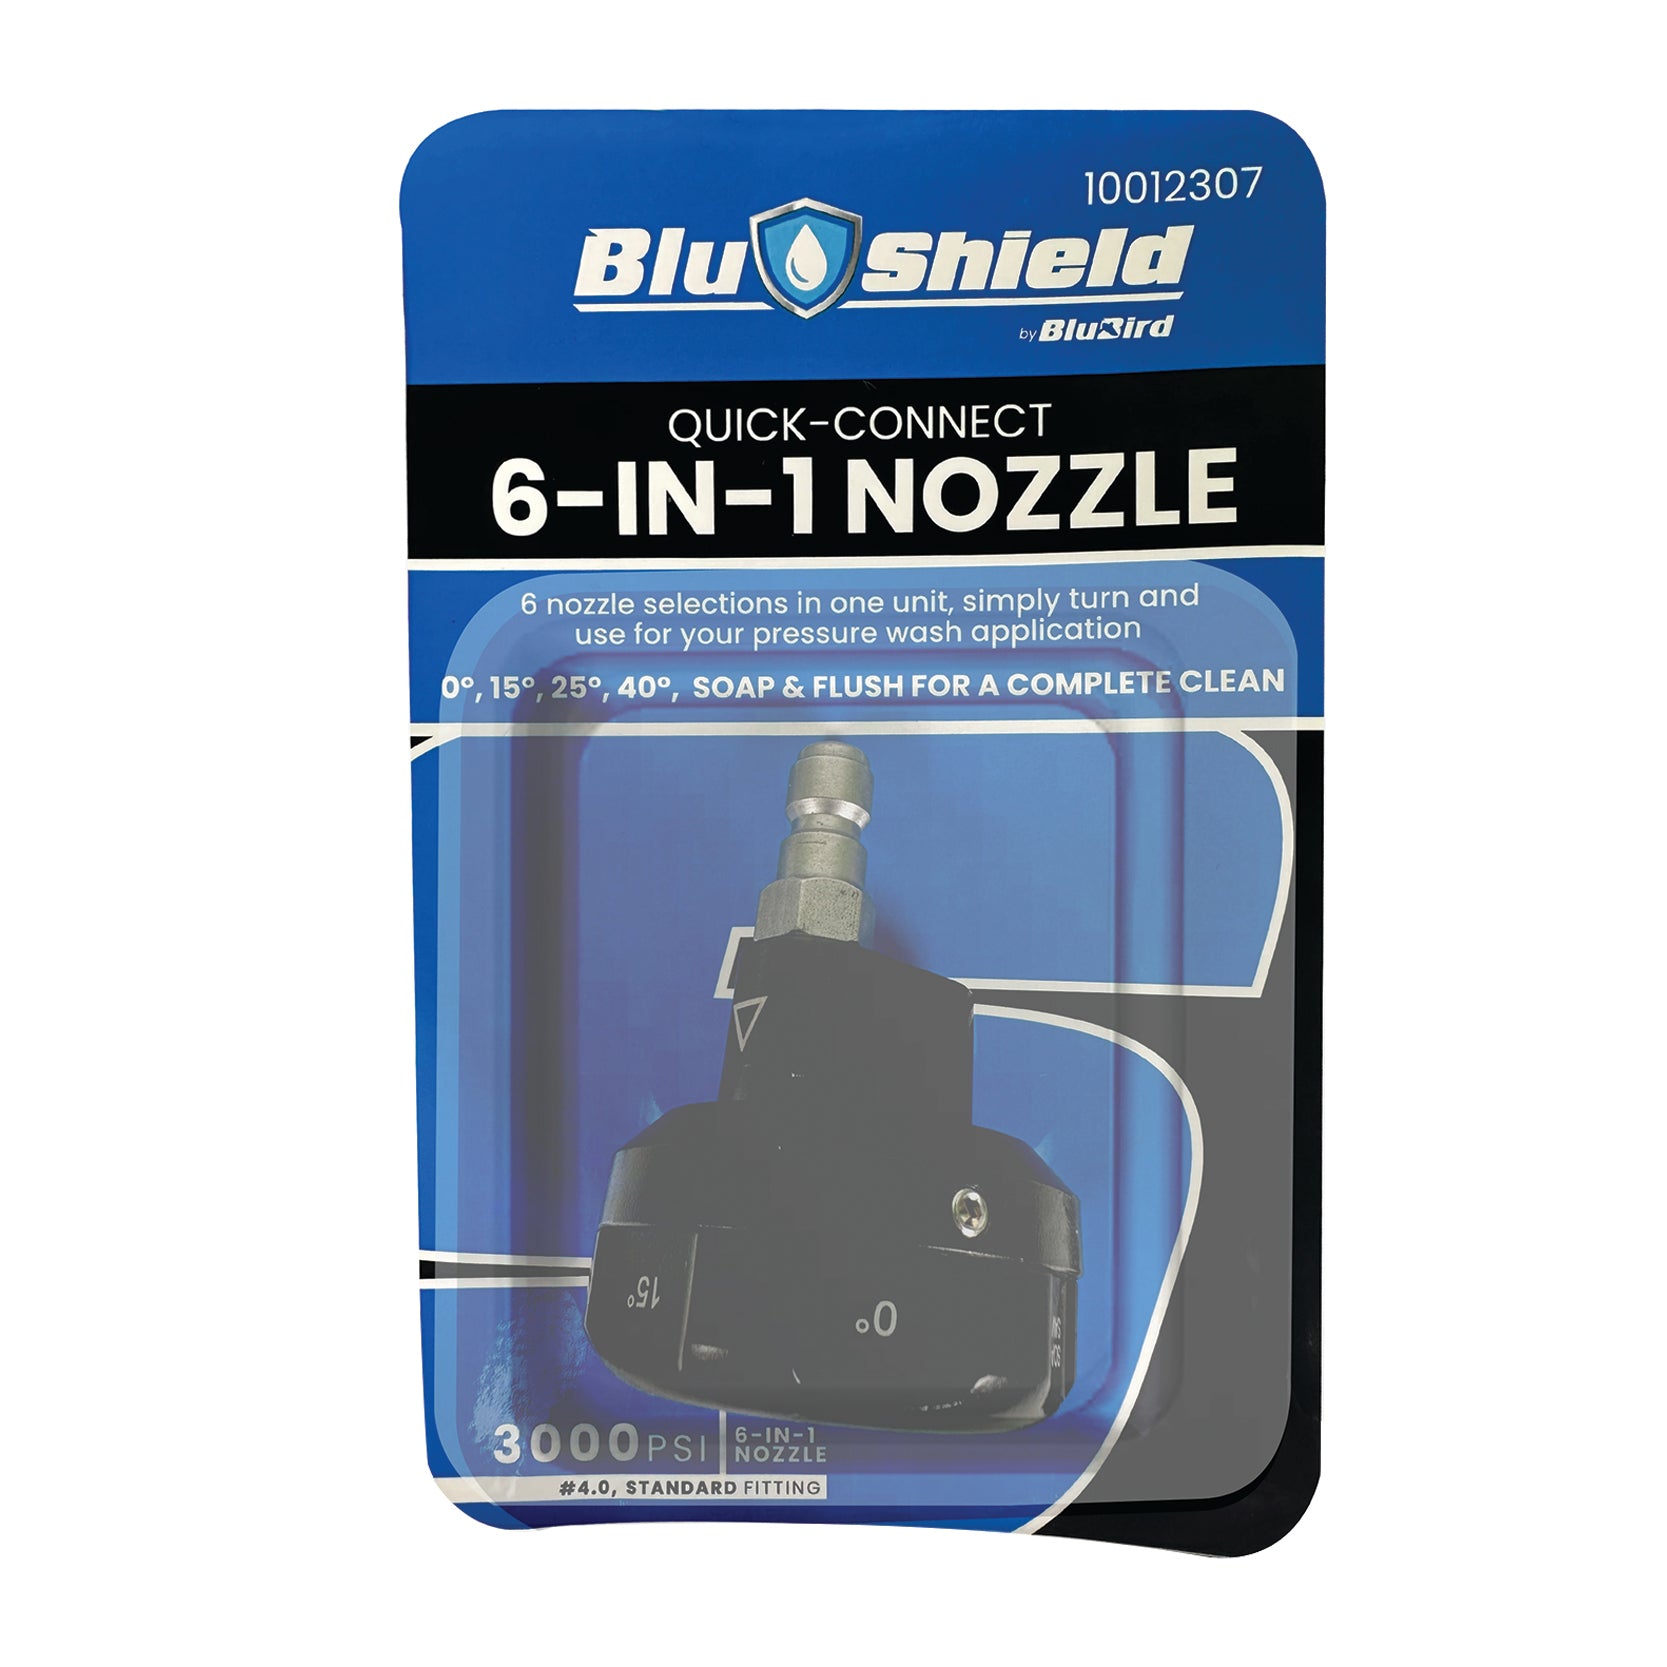 BluShield 6-in-1 Nozzle